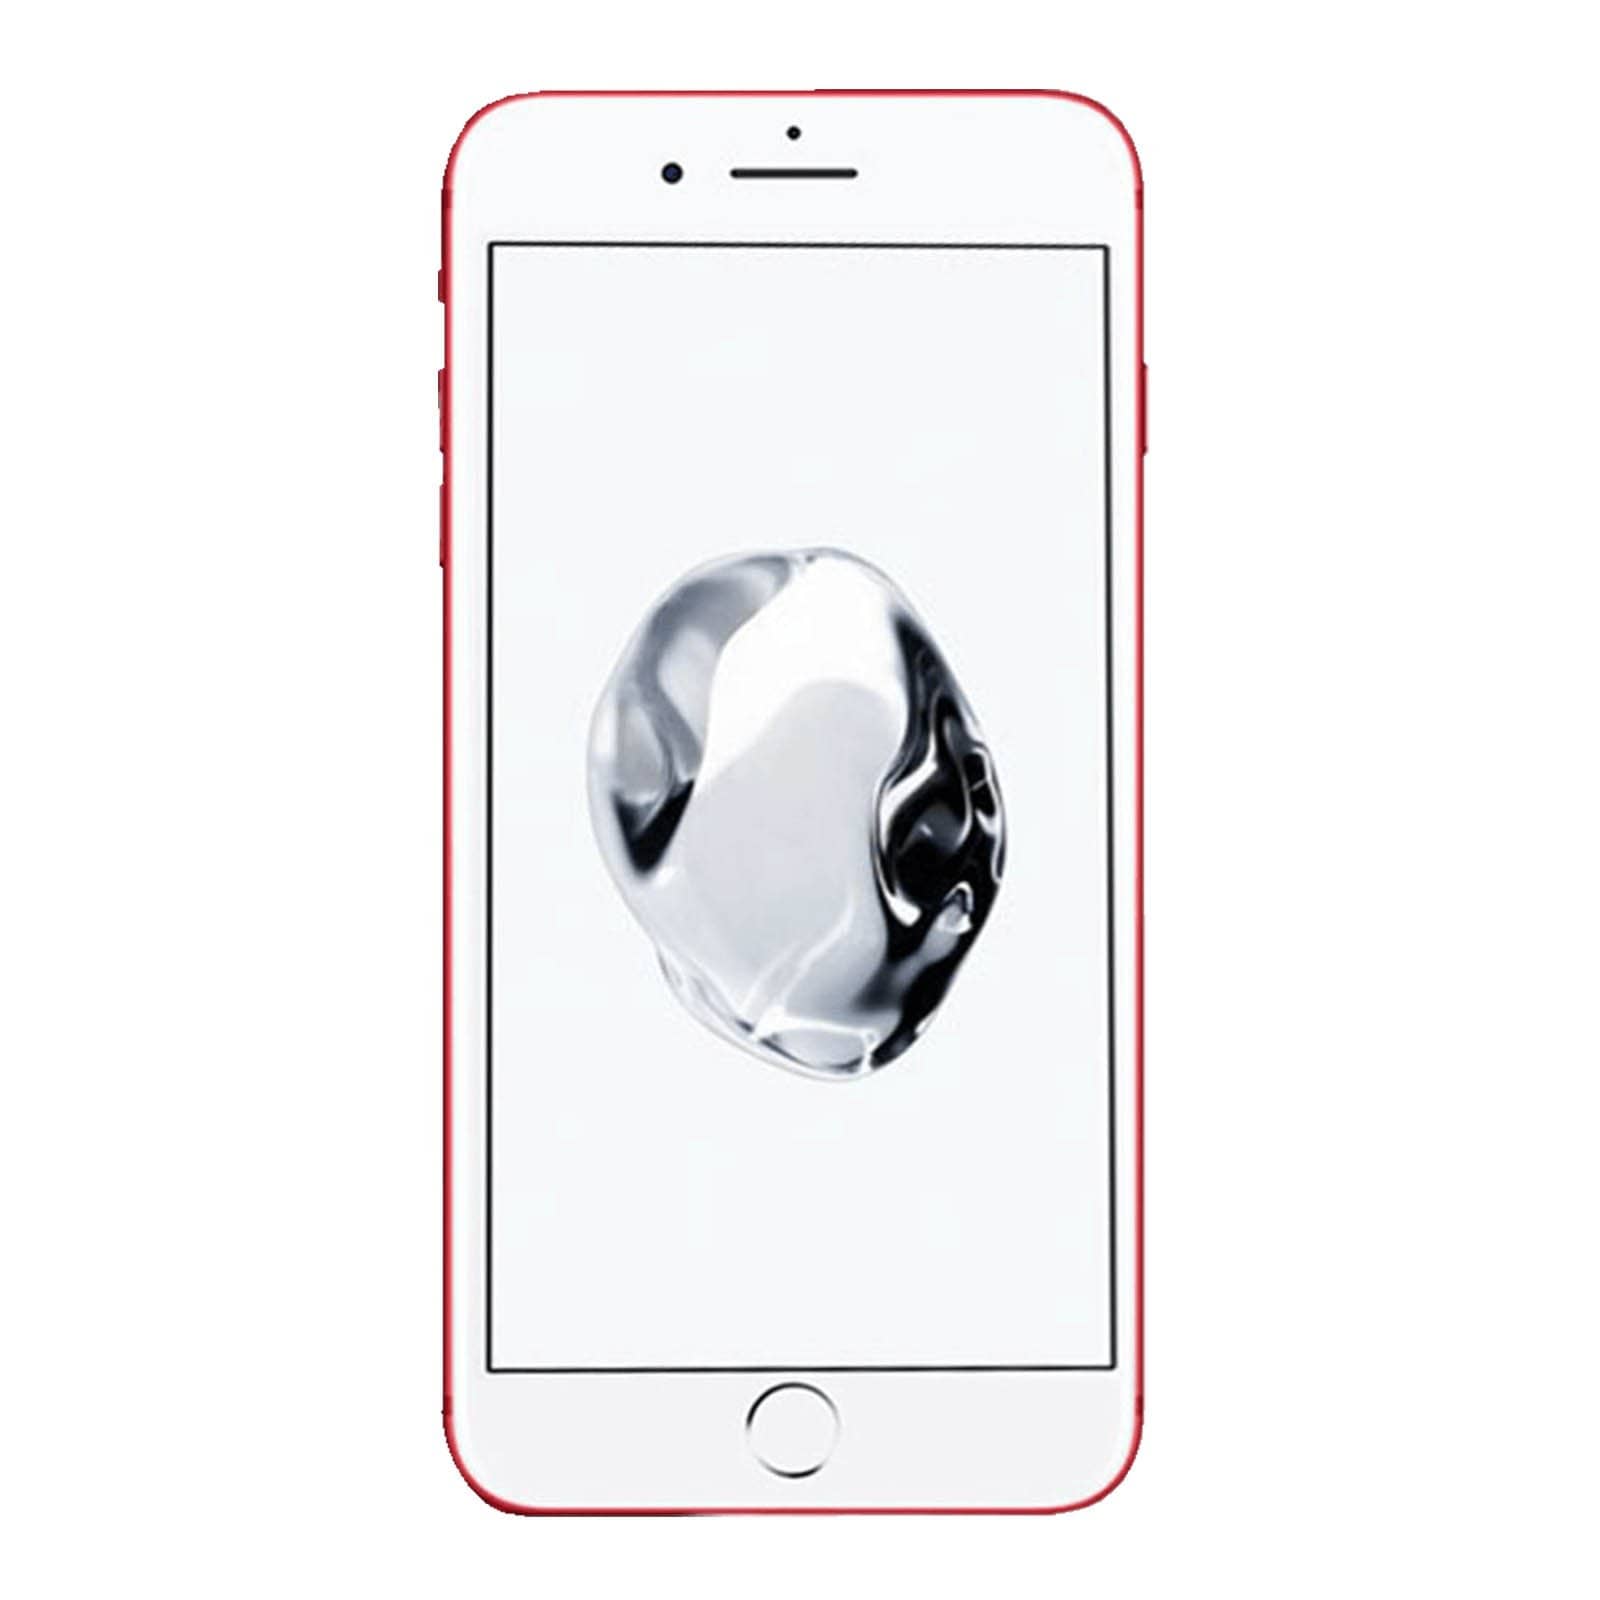 Apple iPhone 7 Plus 128GB Product Red Fair - Unlocked